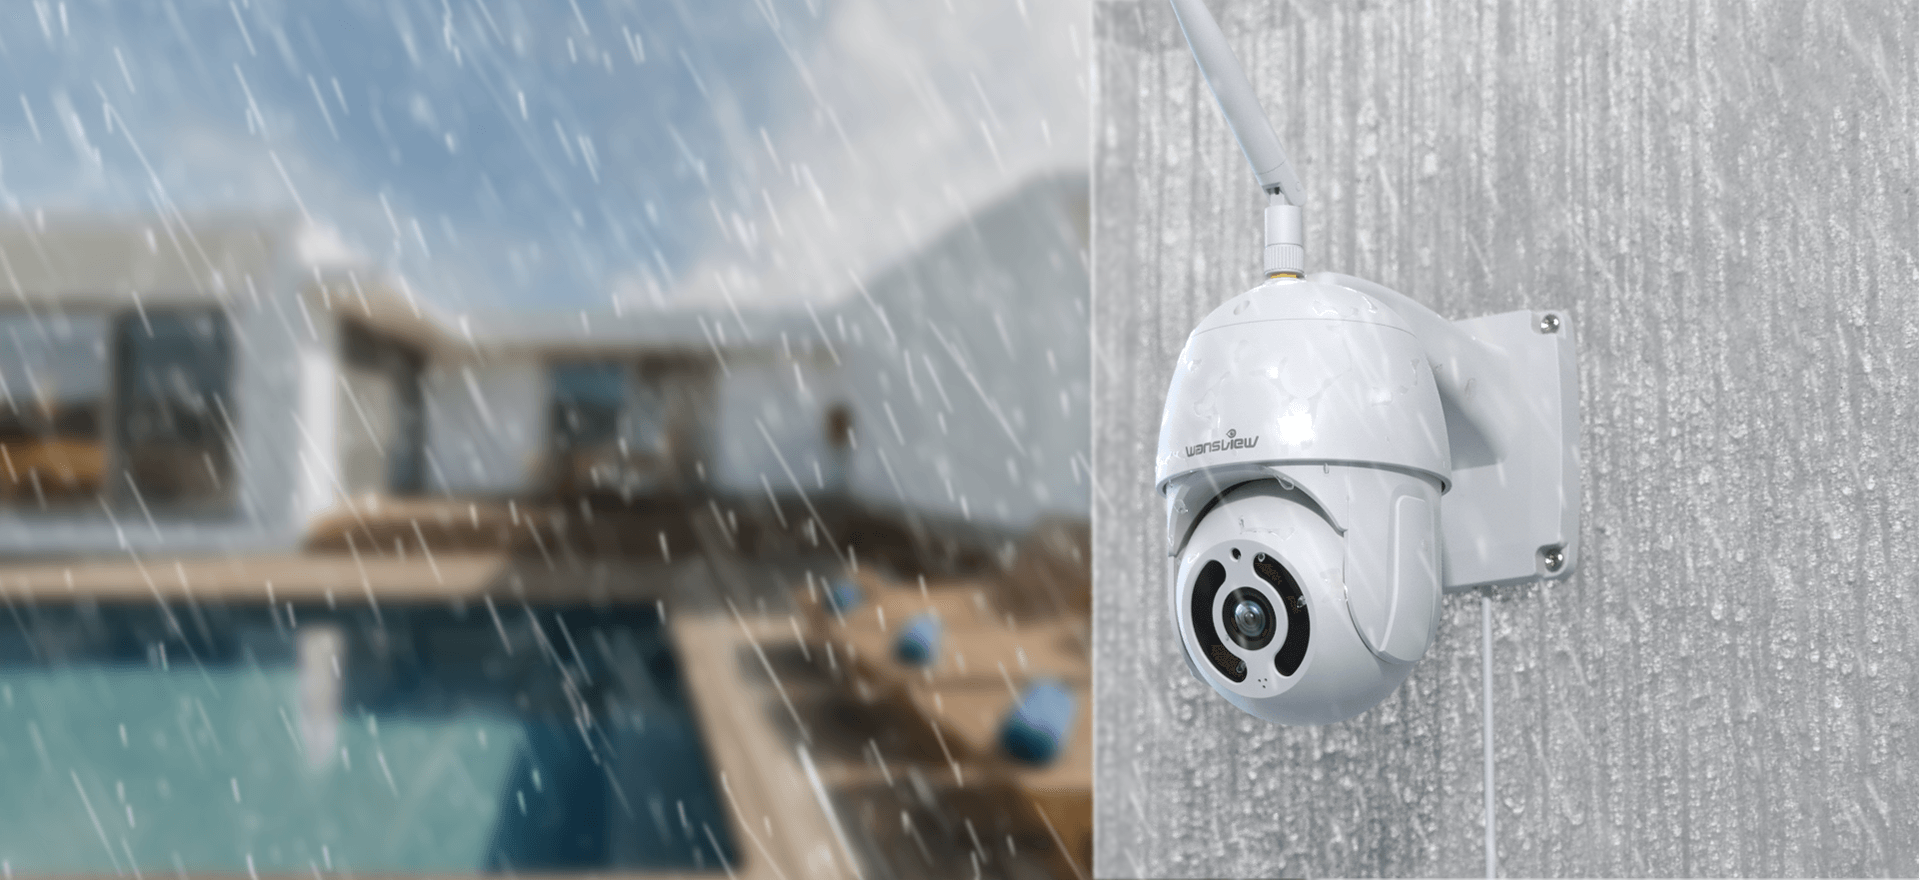 Wansview W9 outdoor wireless security camera budget range 